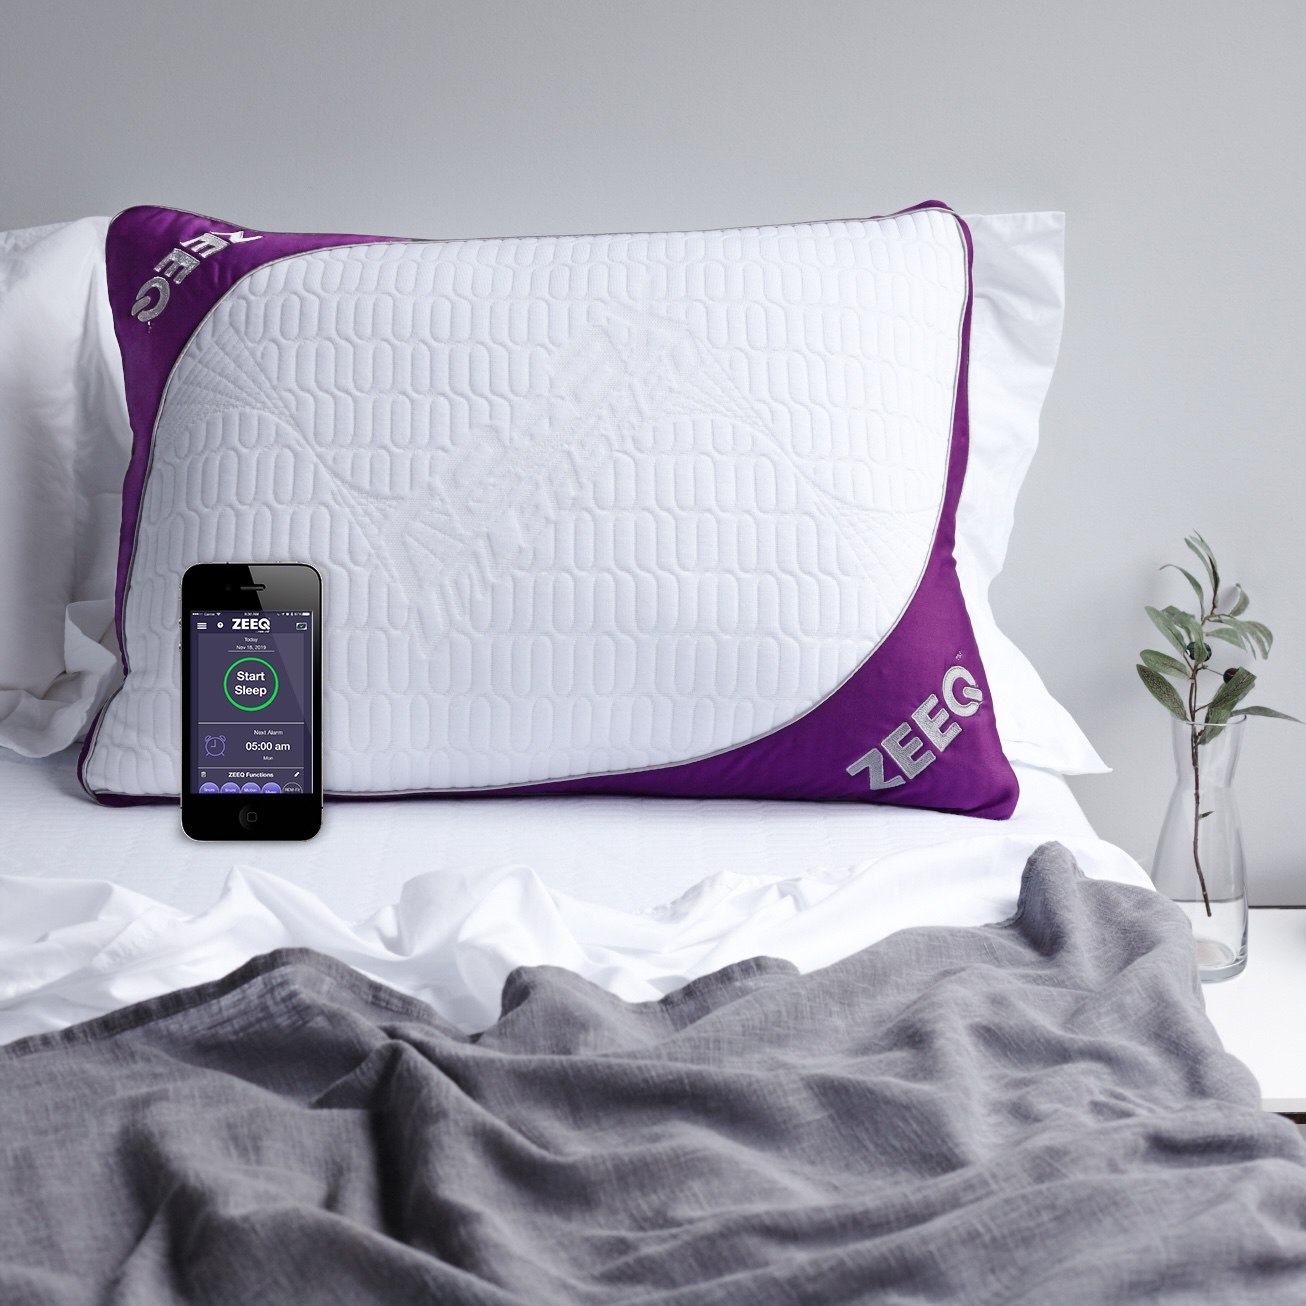 Rem-Fit's ZEEQ Smart Pillow